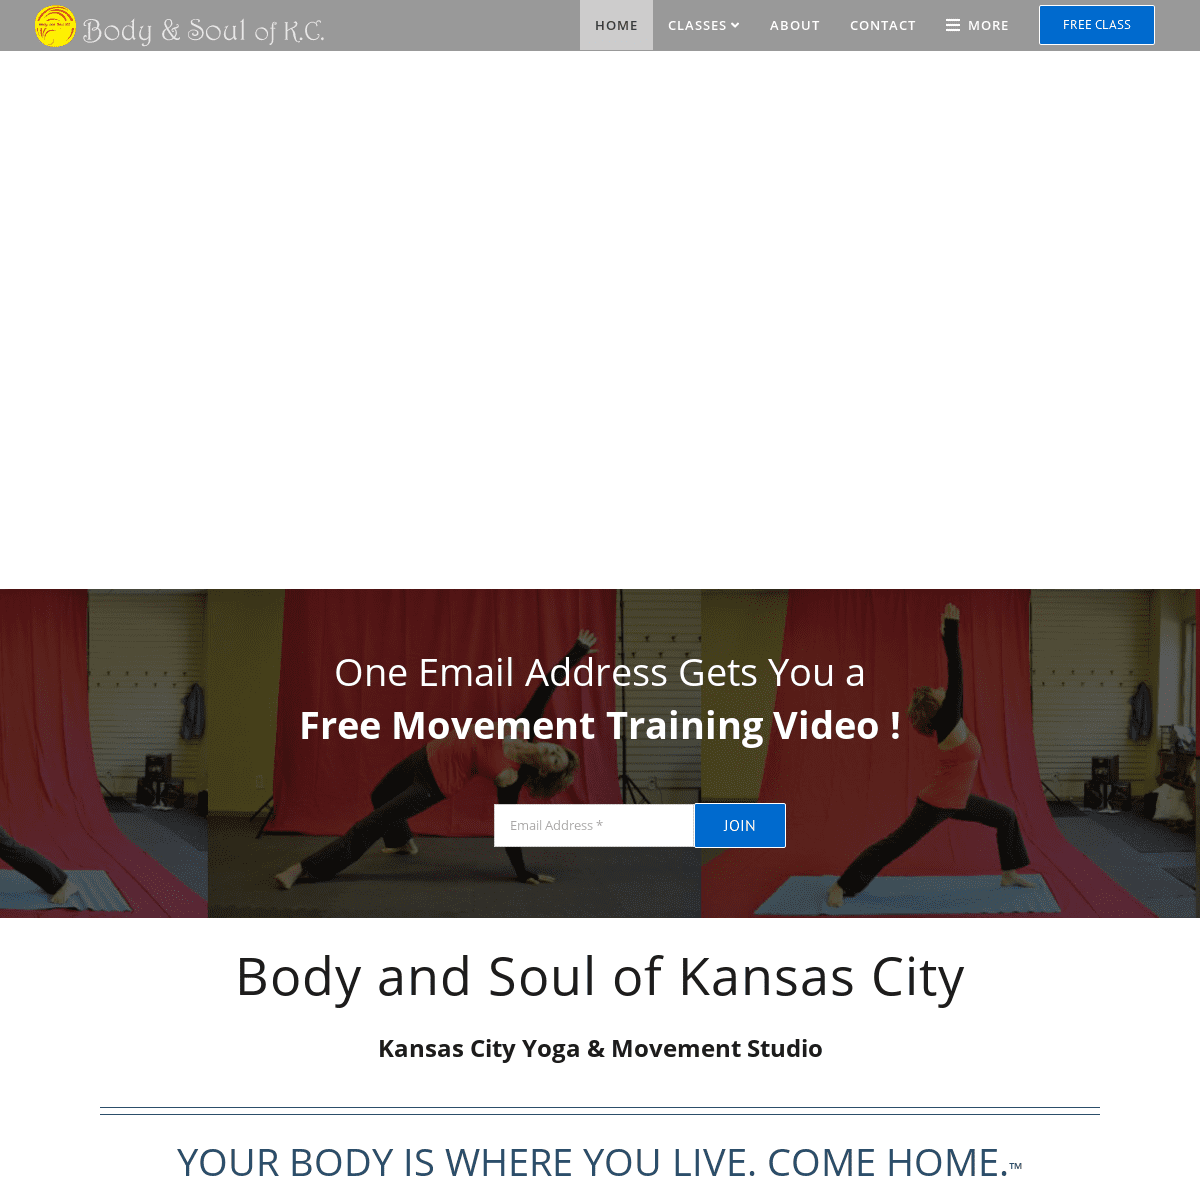 Body and Soul of Kansas City - Yoga & Movement Studio